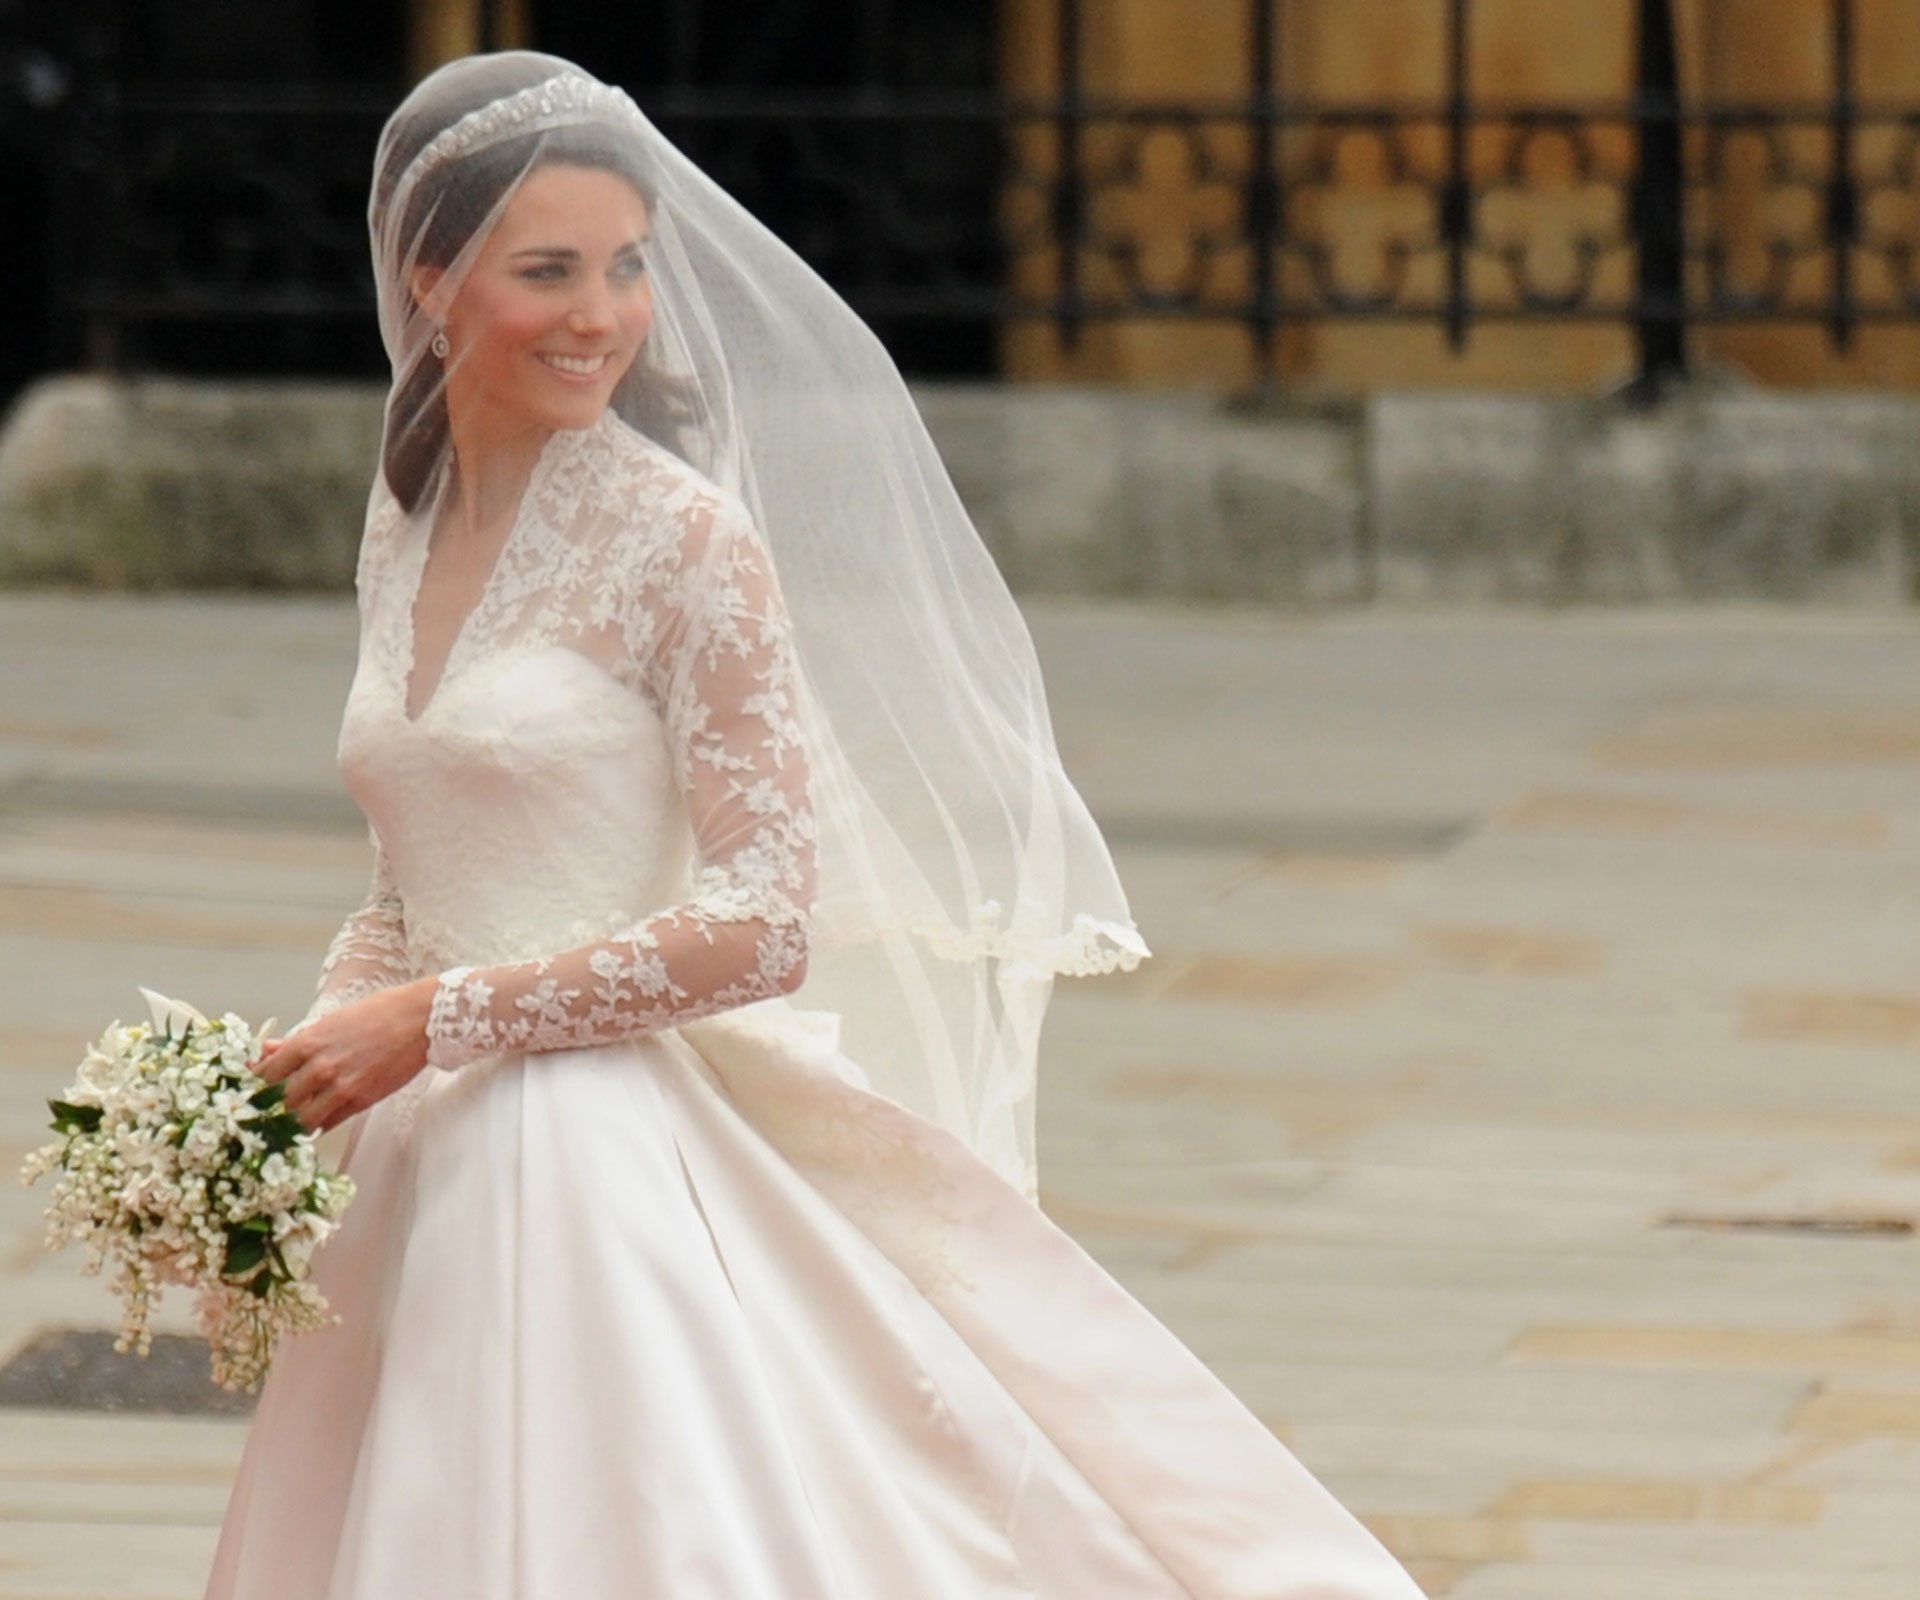 Legal battle over Kate's wedding dress